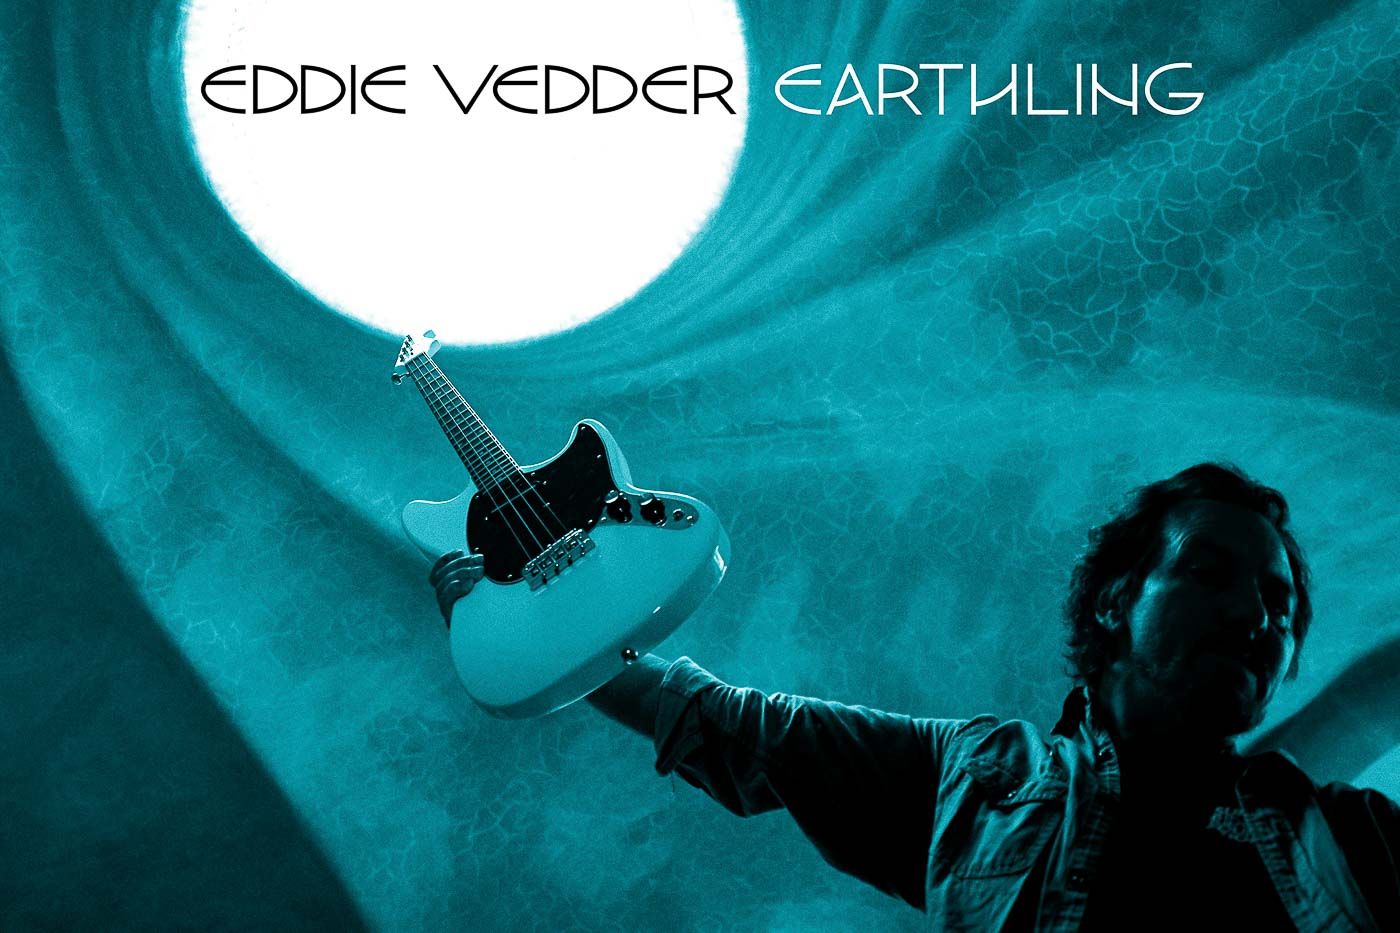 Eddie Vedder “Earthling” (Seattle Surf/Republic Records, 2022)